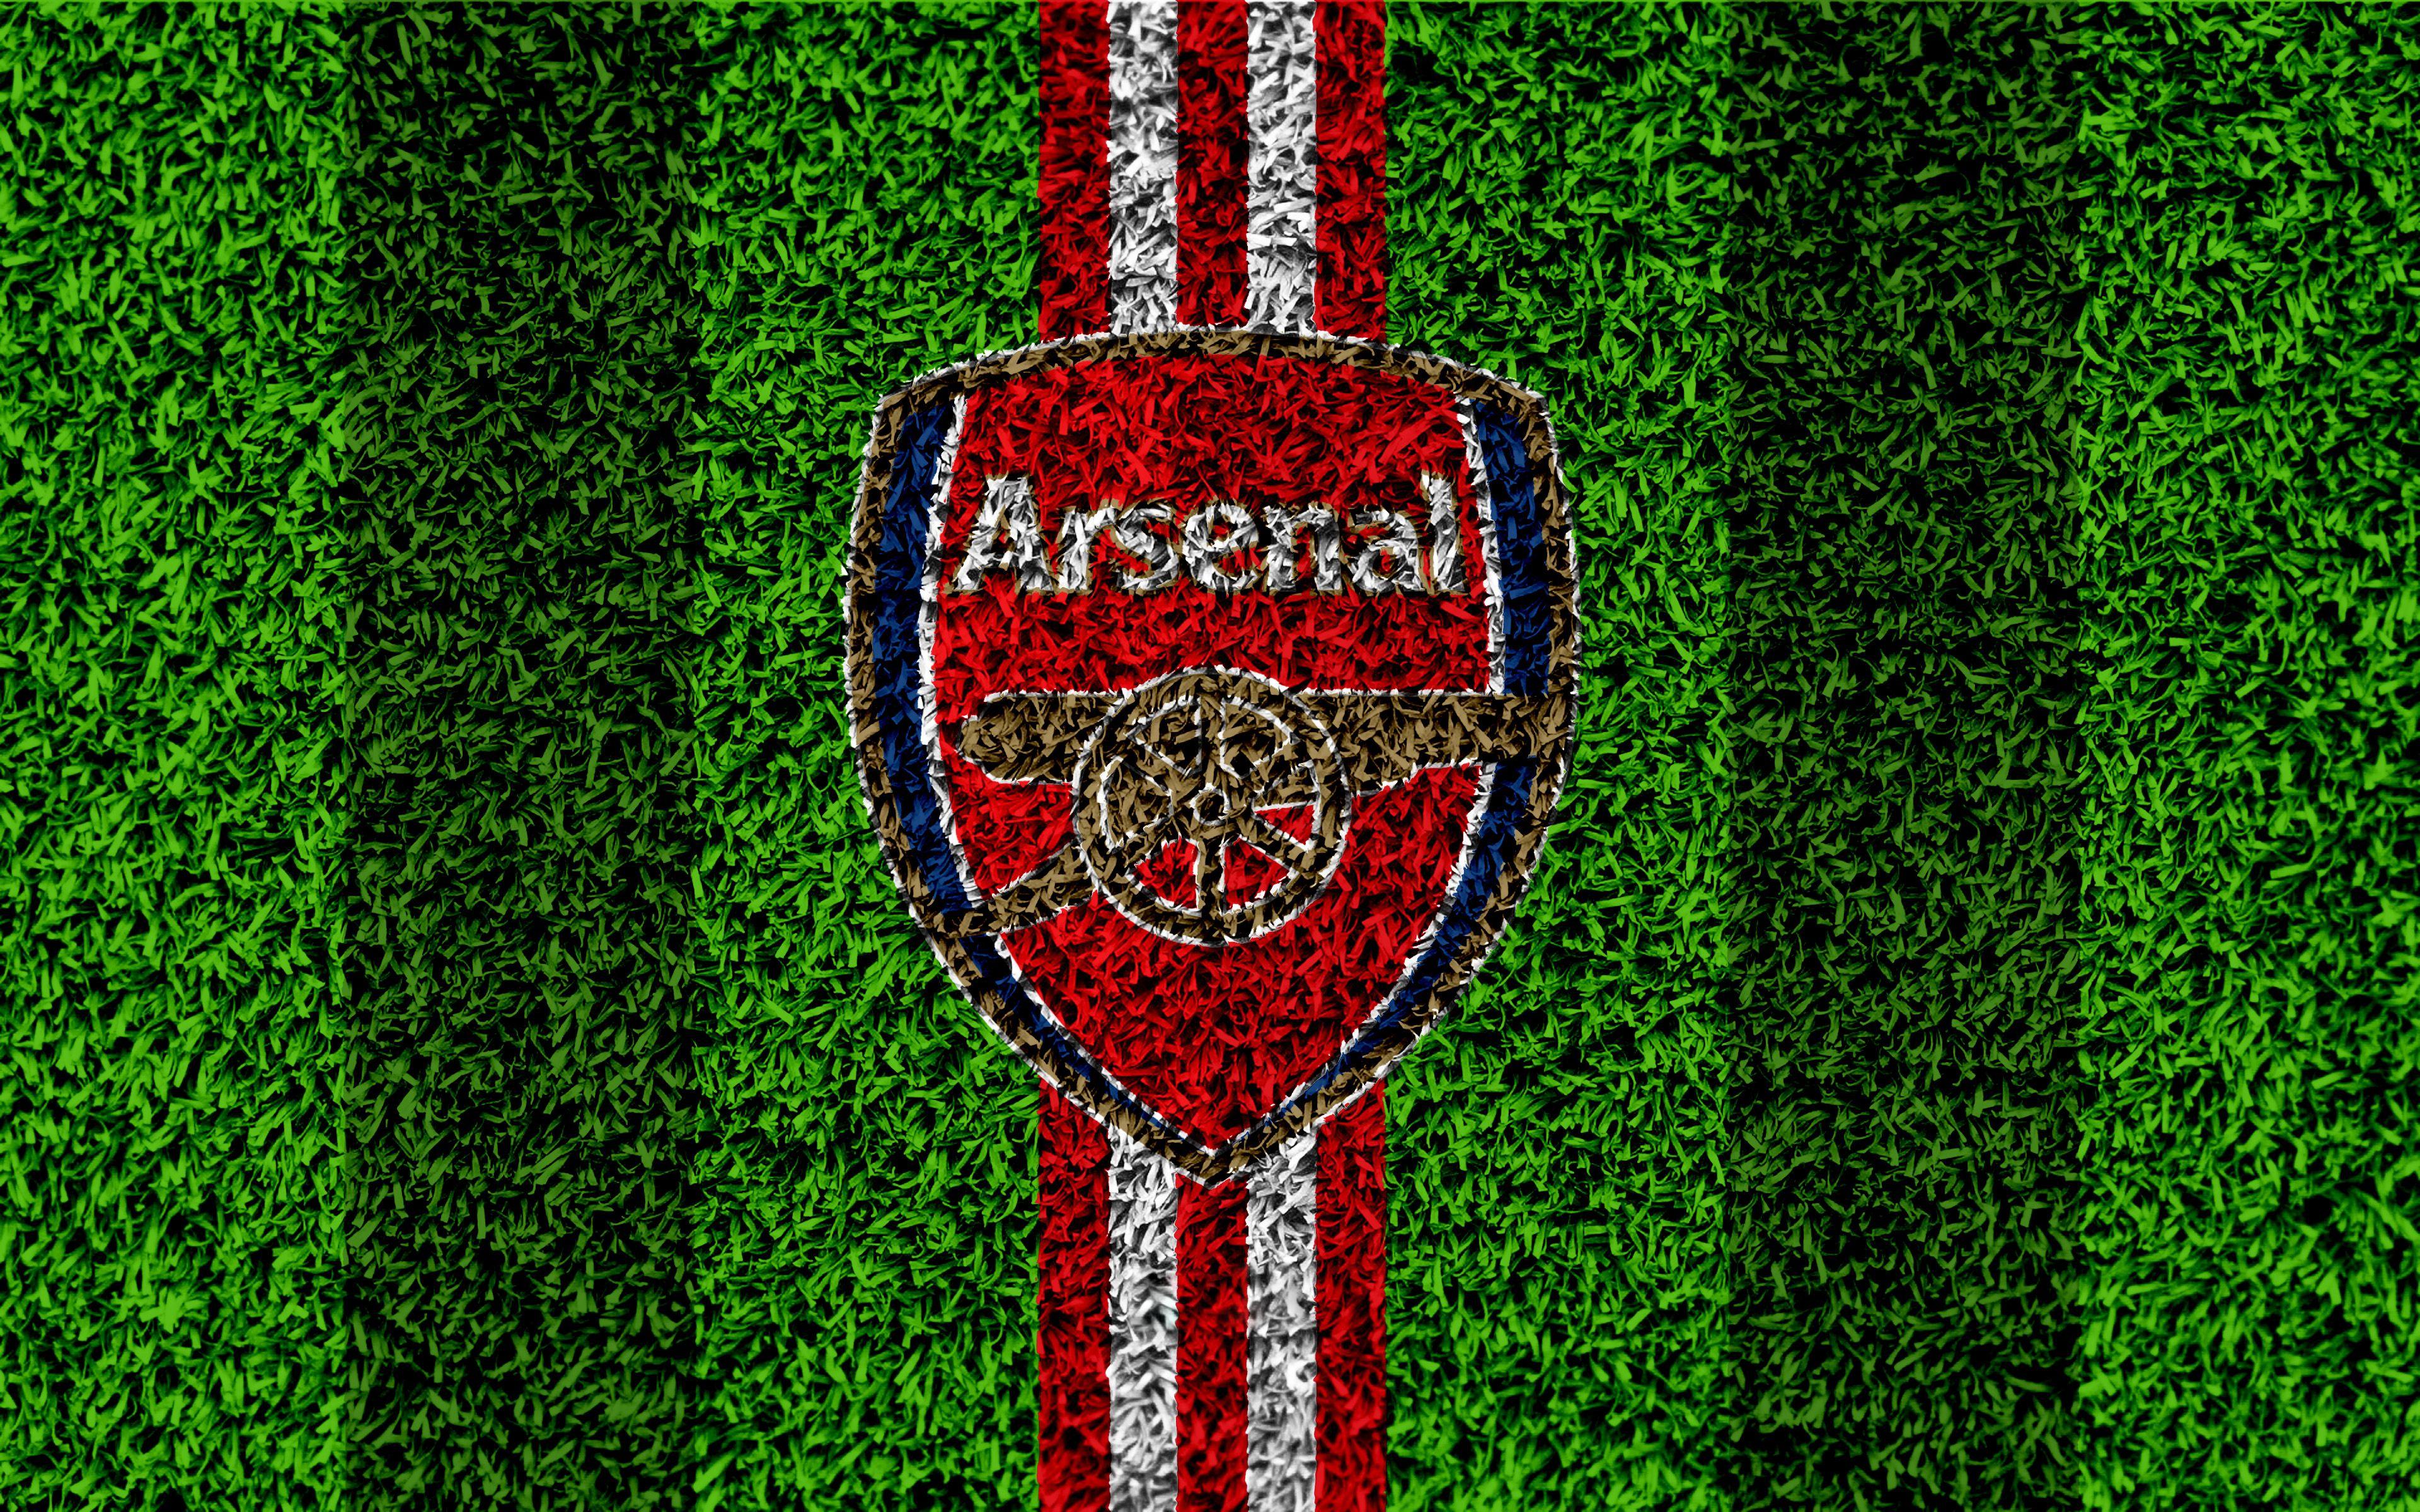 Arsenal Wallpaper 4K